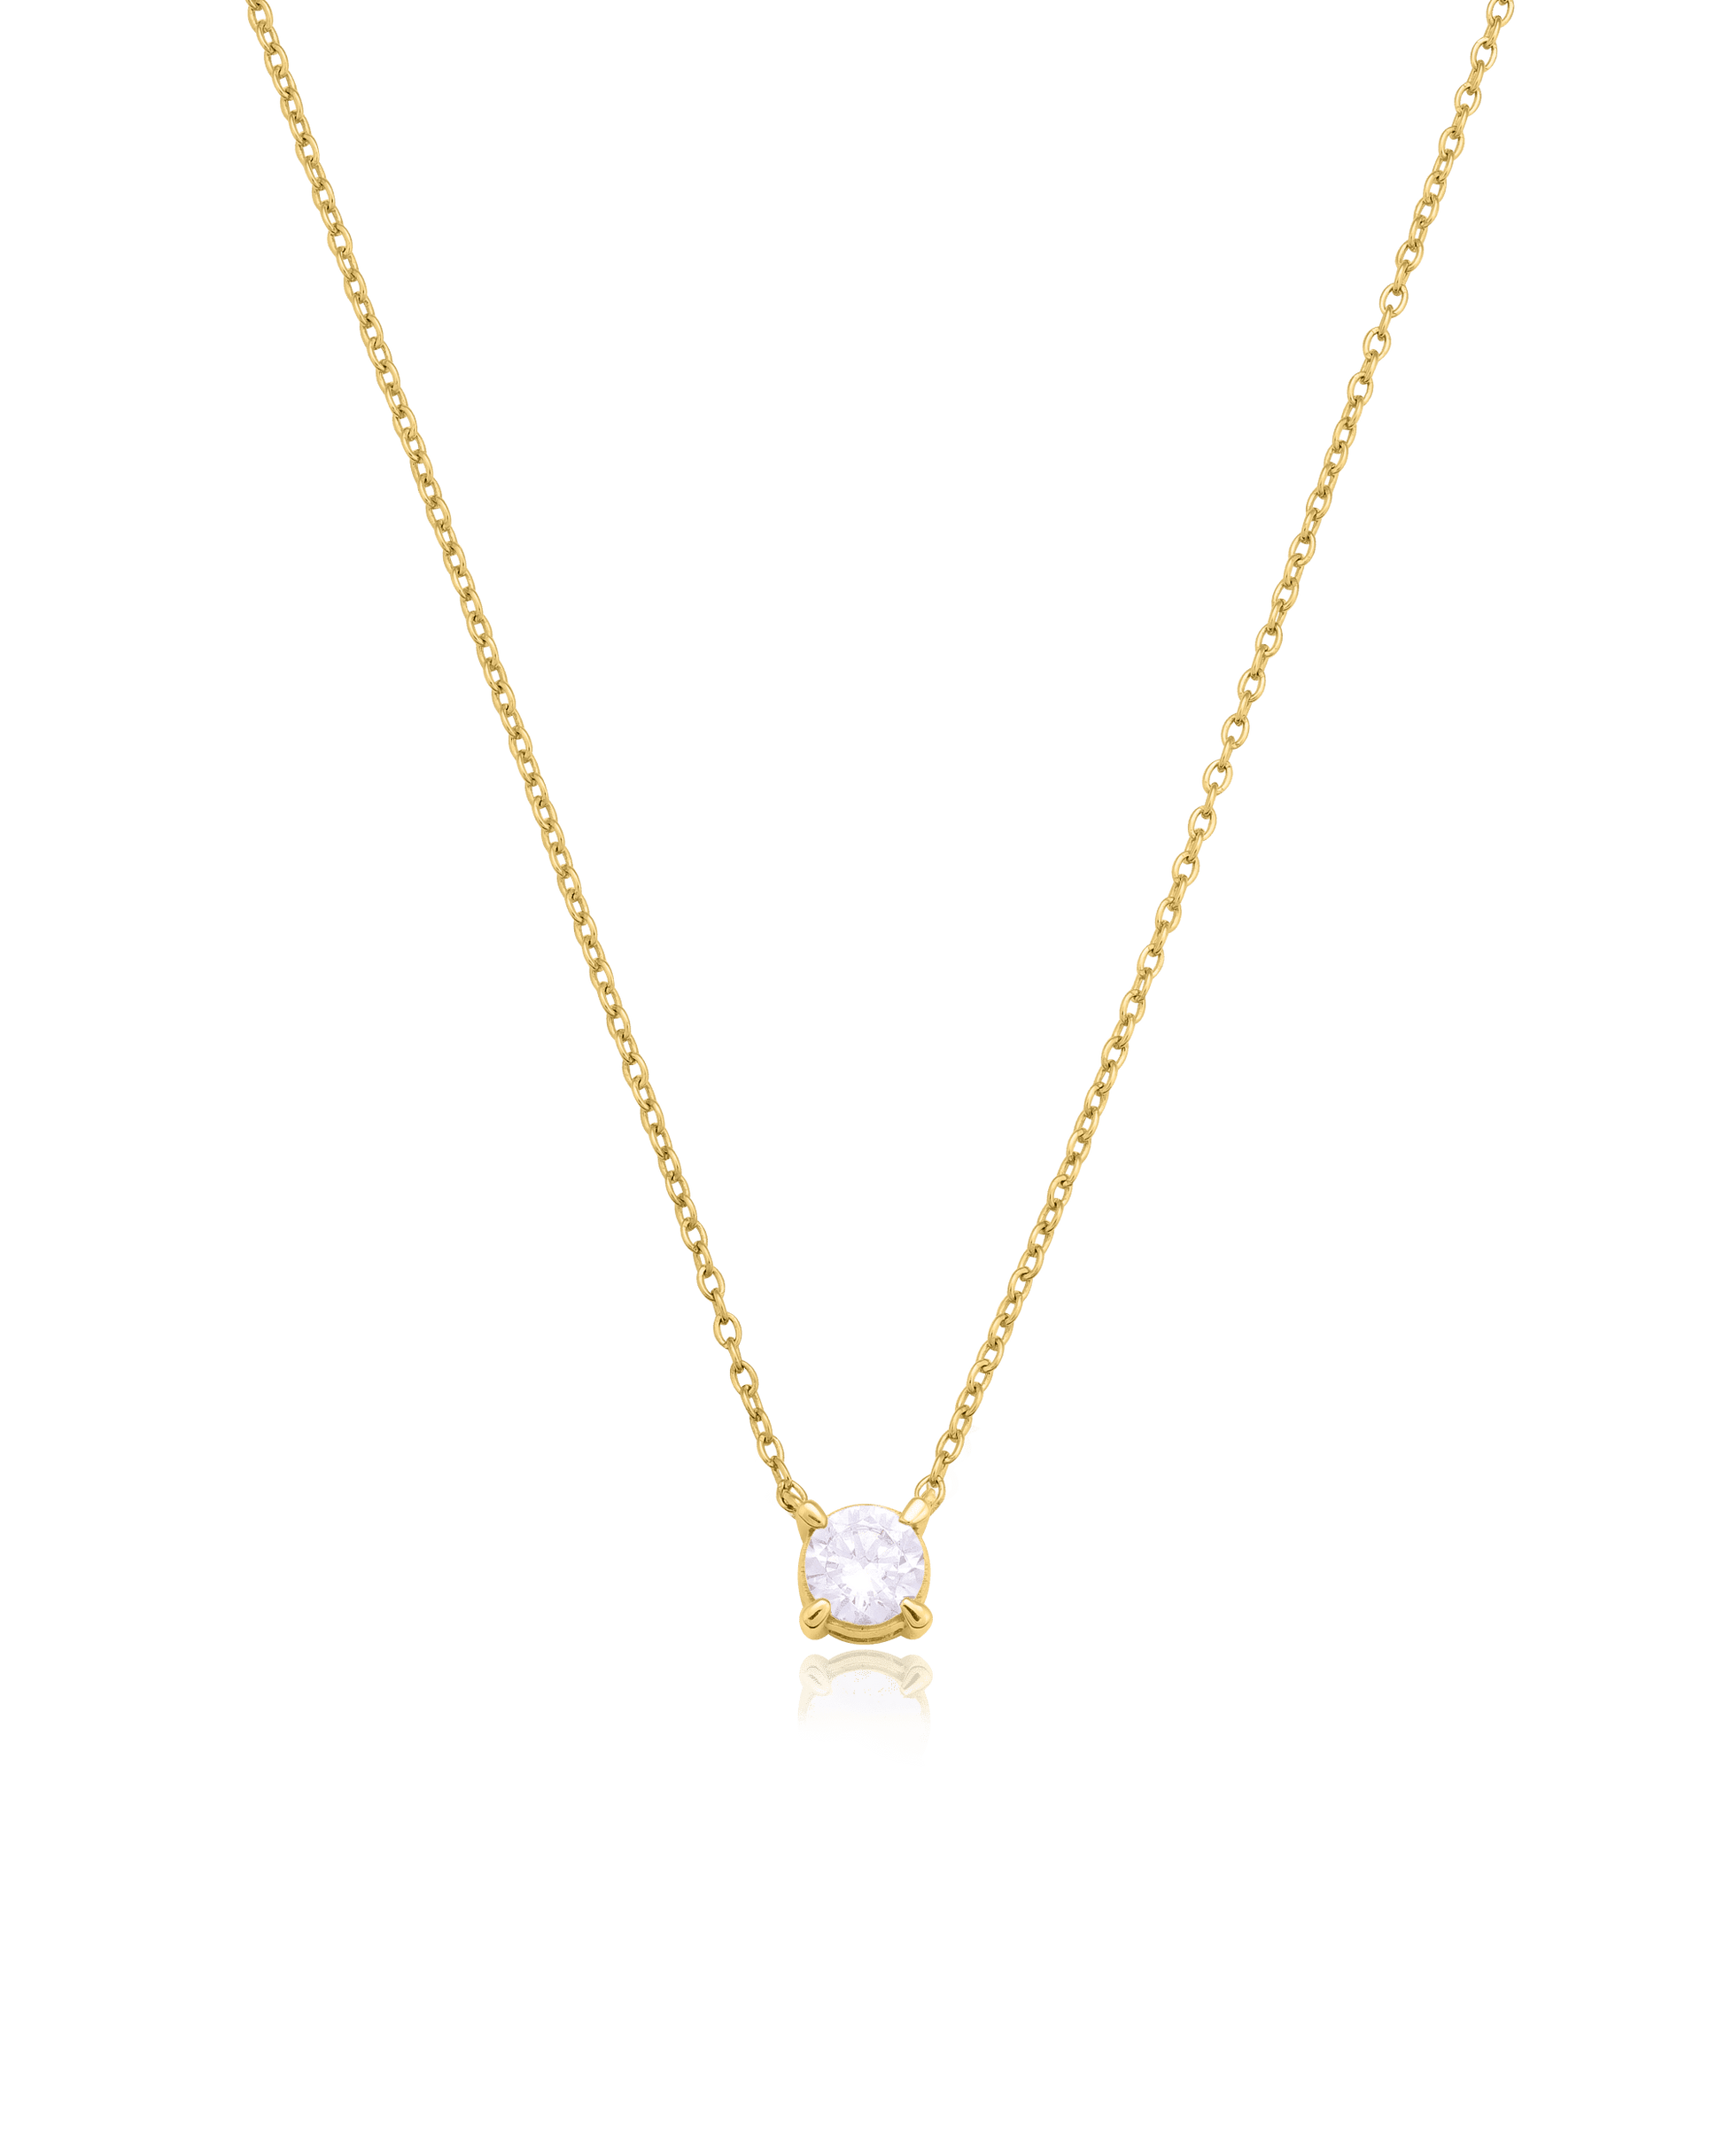 Collier Diamant Rond Solitaire - Or Jaune 14 carats Necklaces magal-dev 0.10 carats 40cm 